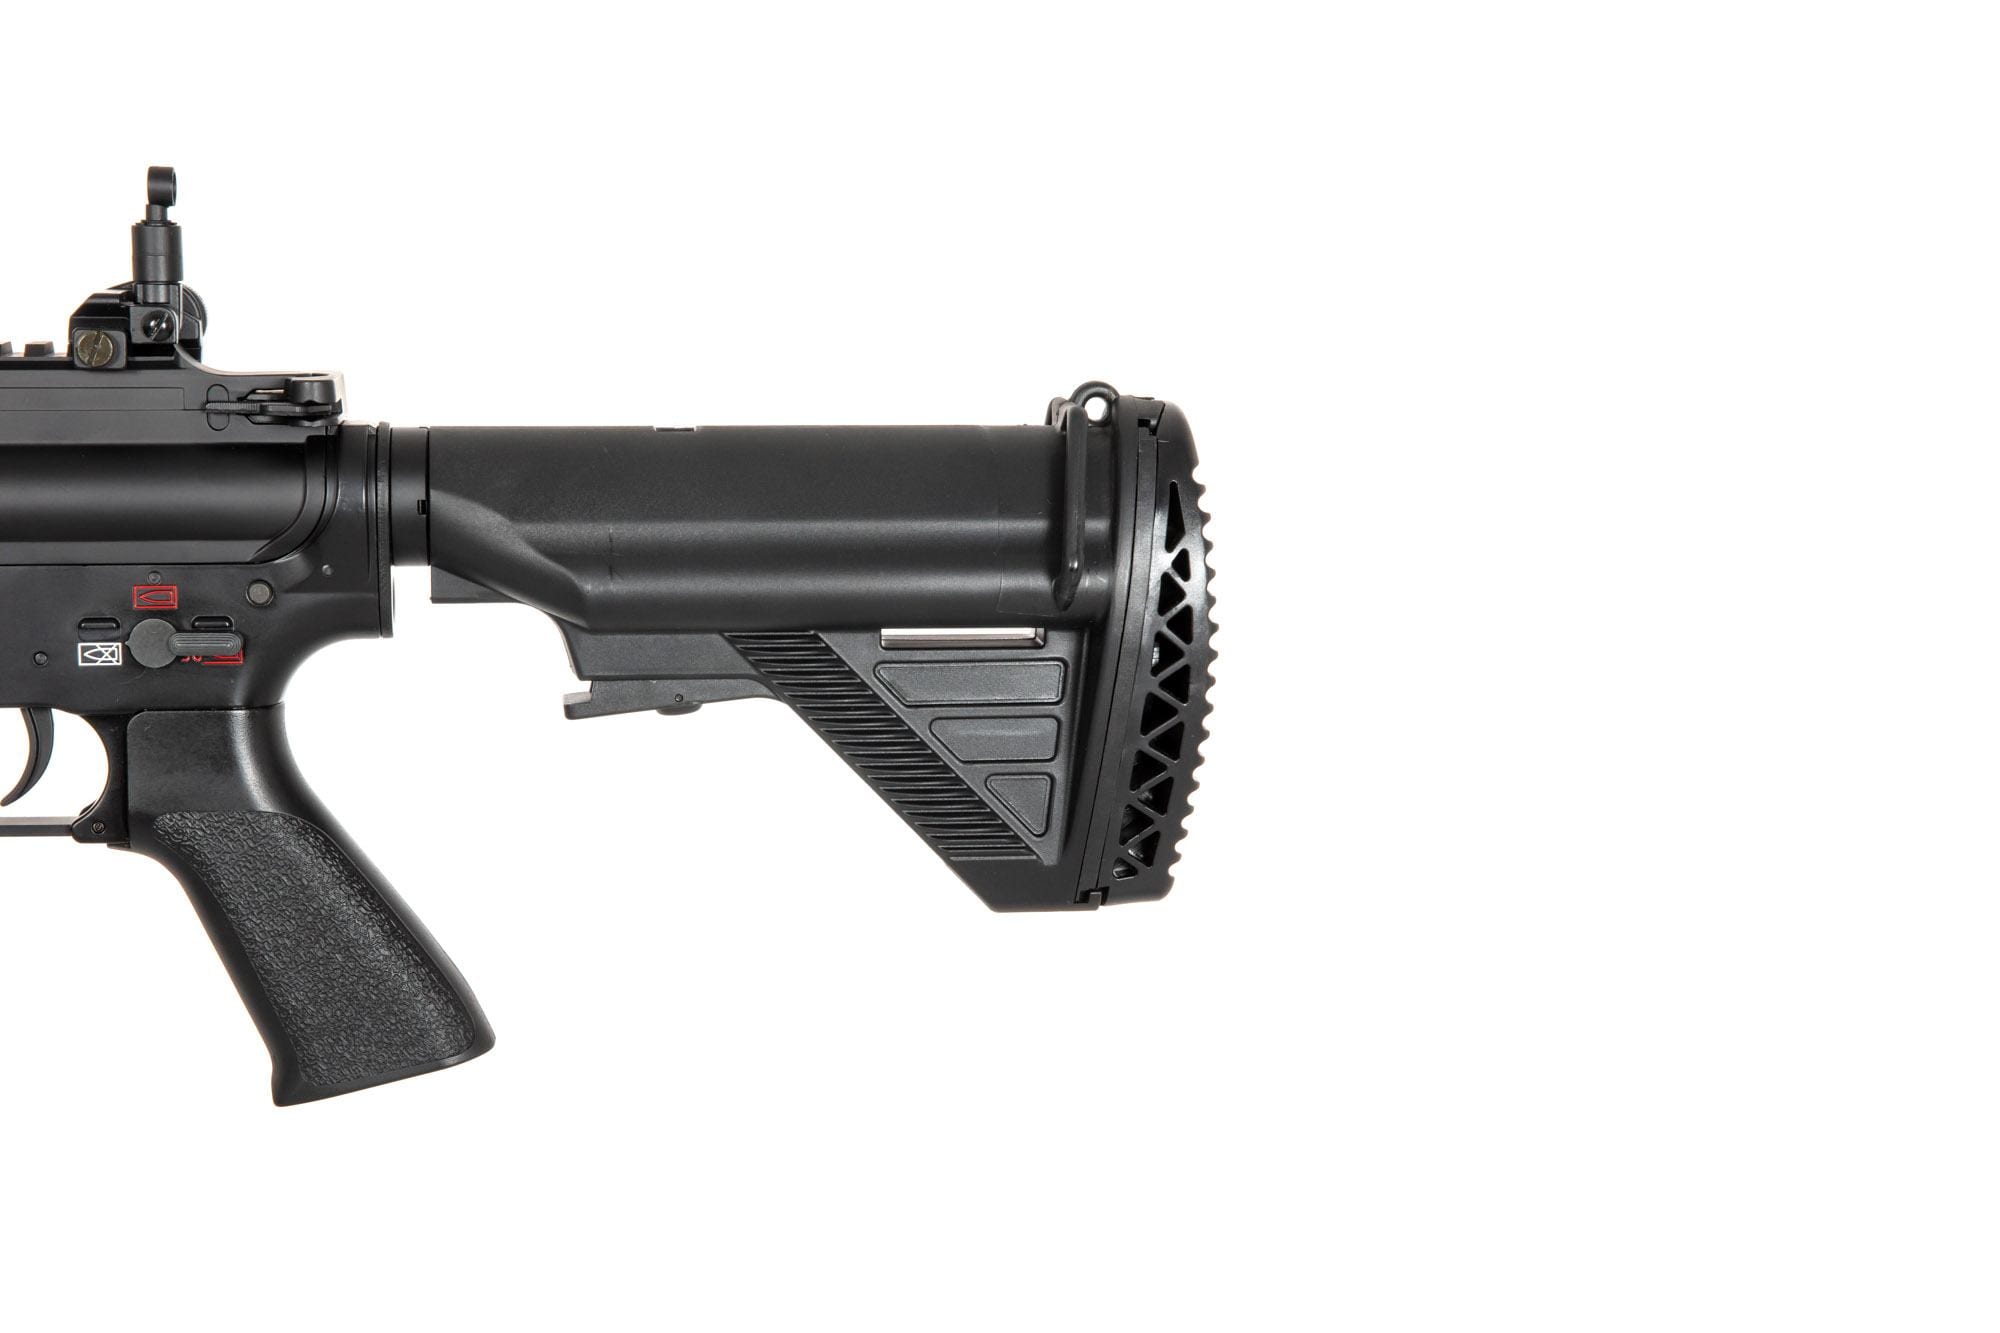 HK416A5 812S Carbine Replica - black